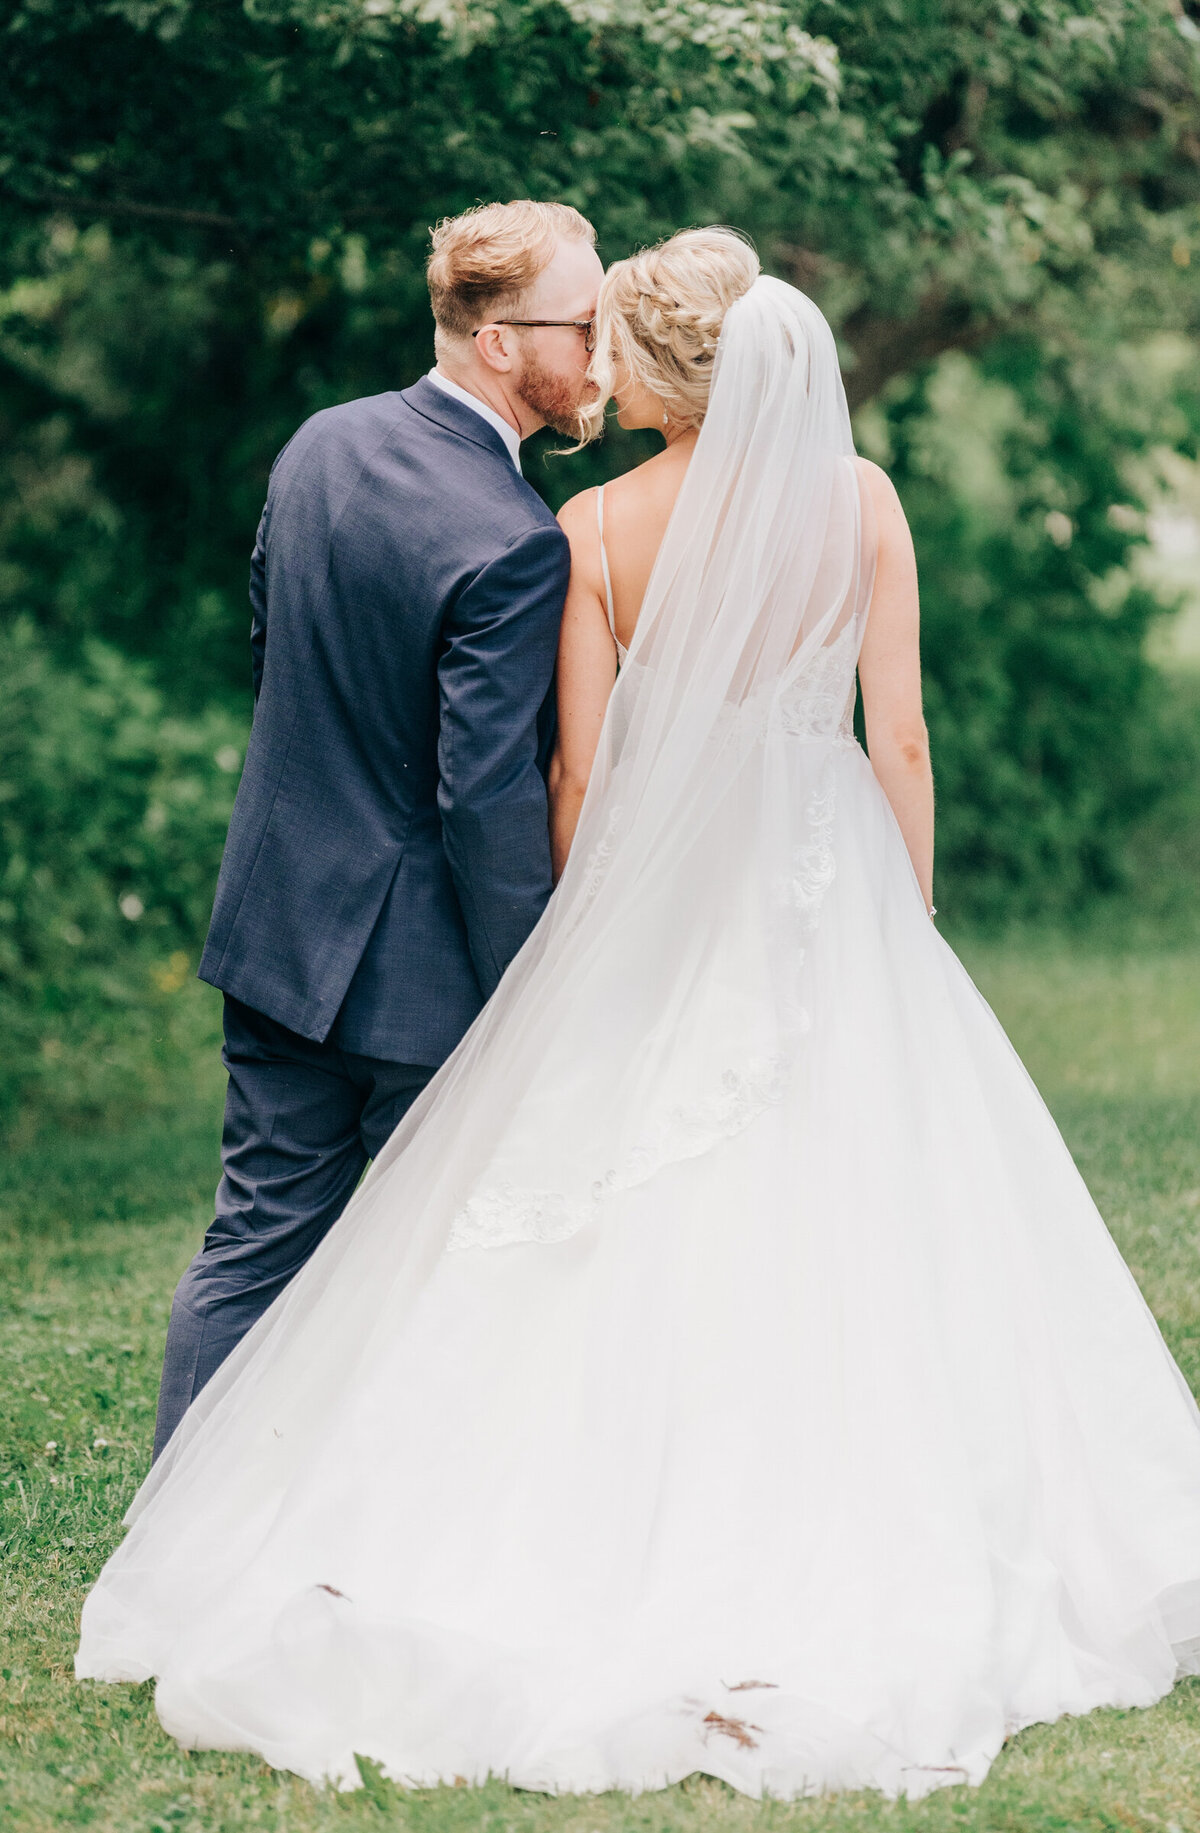 Elegant bride and groom kiss while walking